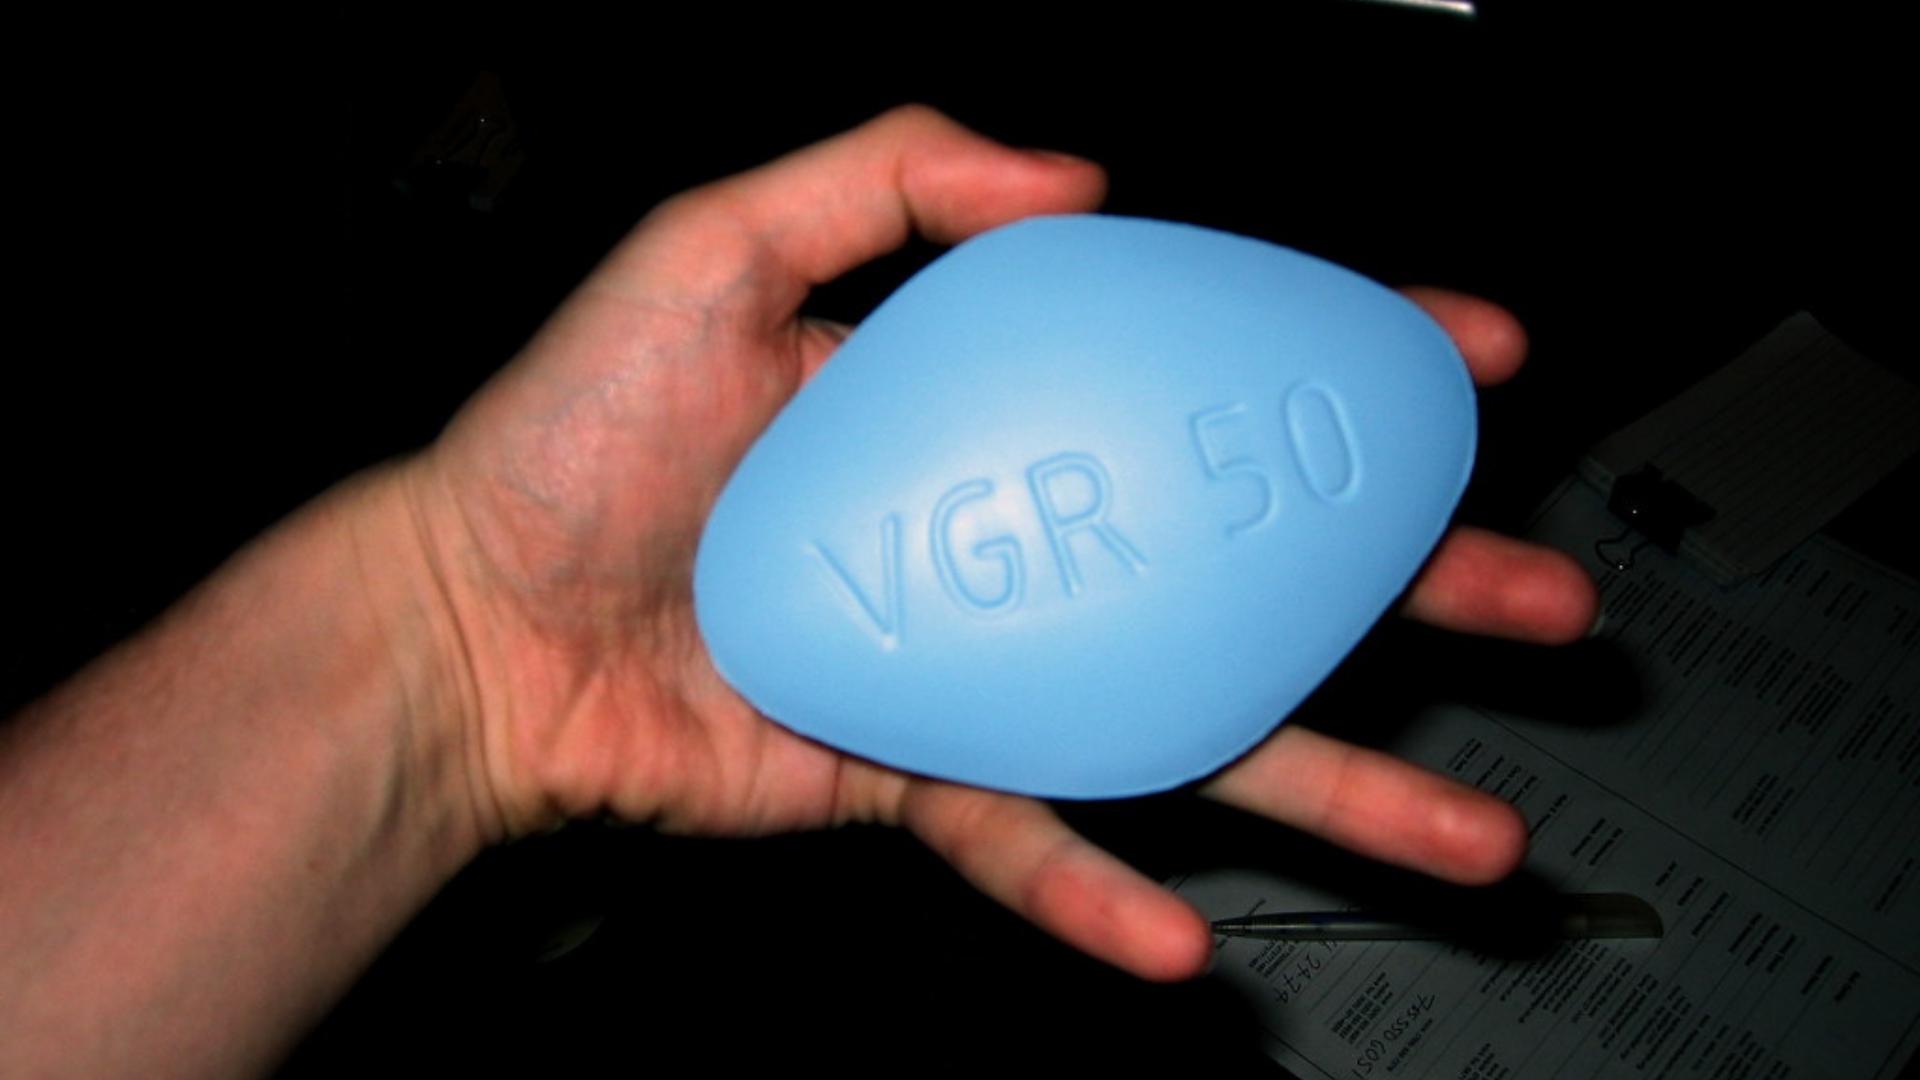 Imagen de referencia de pastilla gigante de Viagra. Foto: Simon Willison